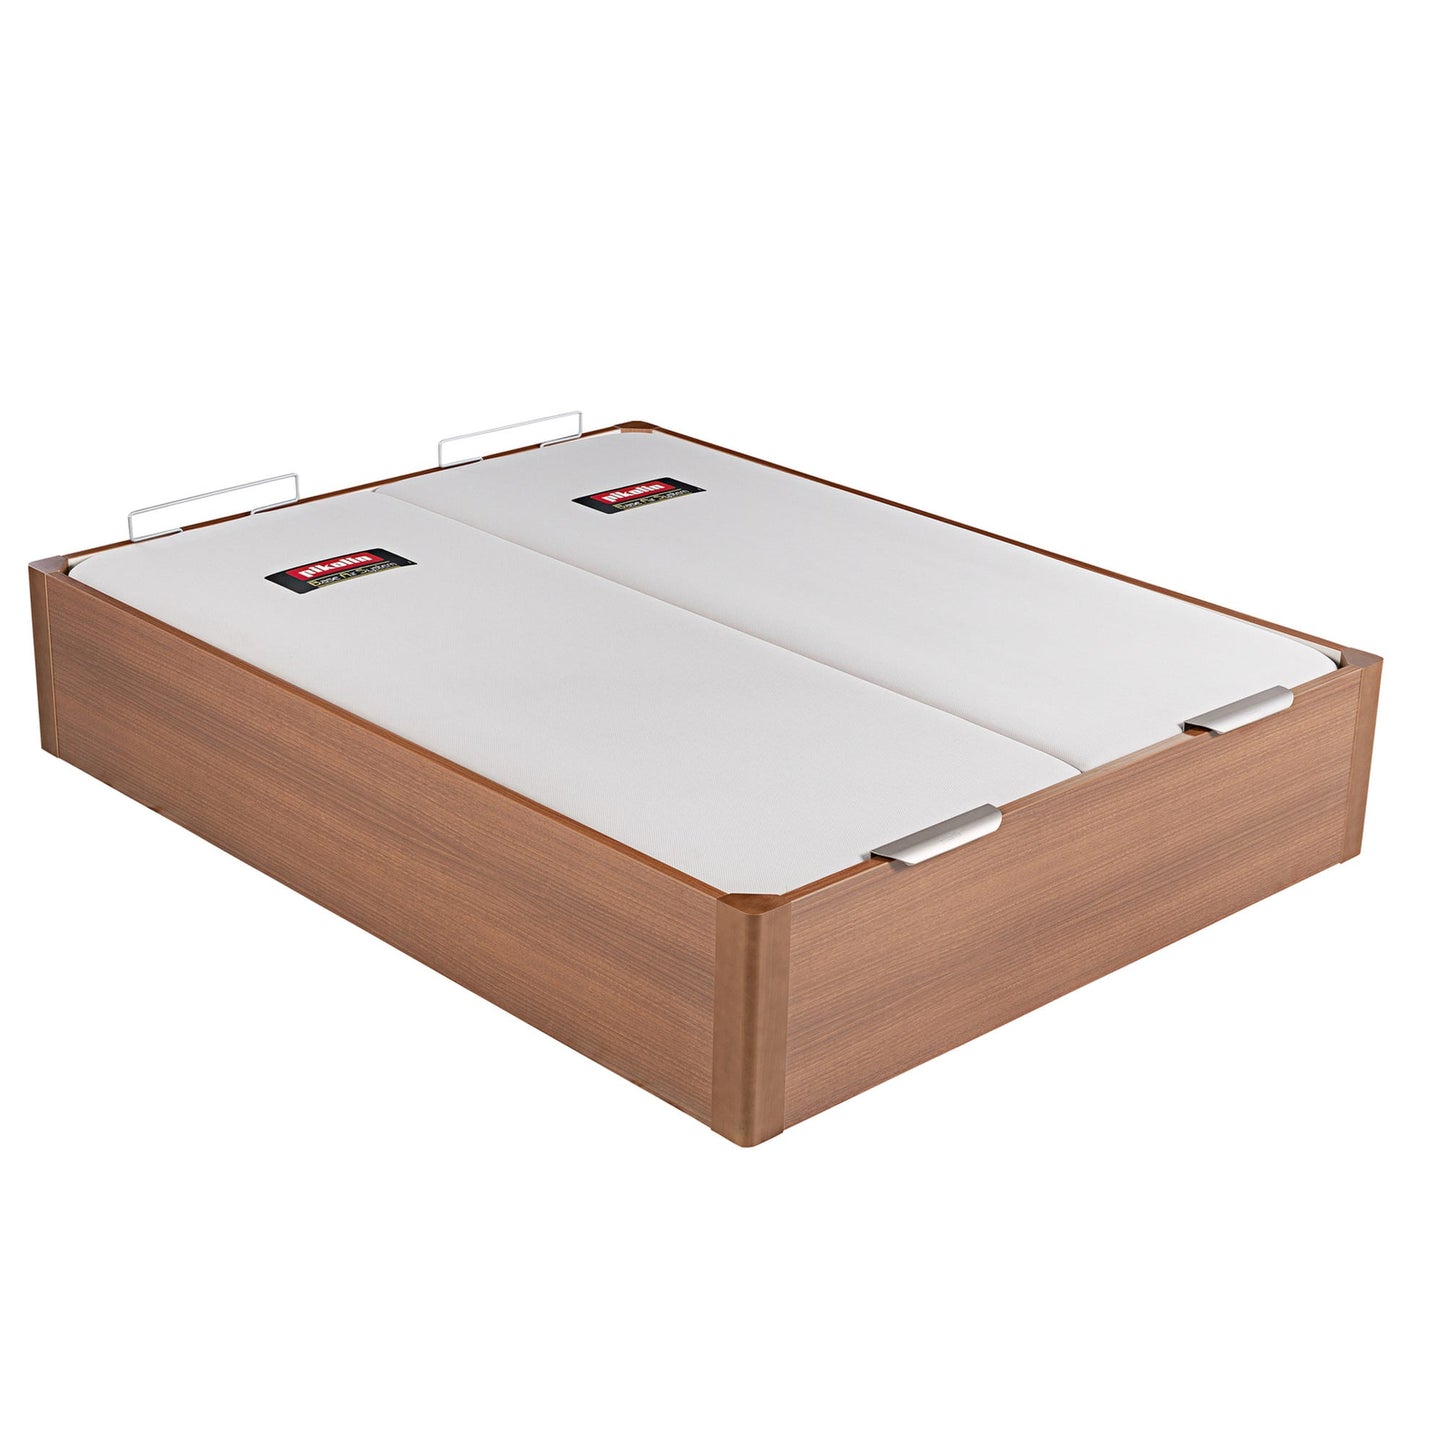 Canapé abatible de madera de alta capacidad tapa doble de color cerezo - DESIGN - 180x182